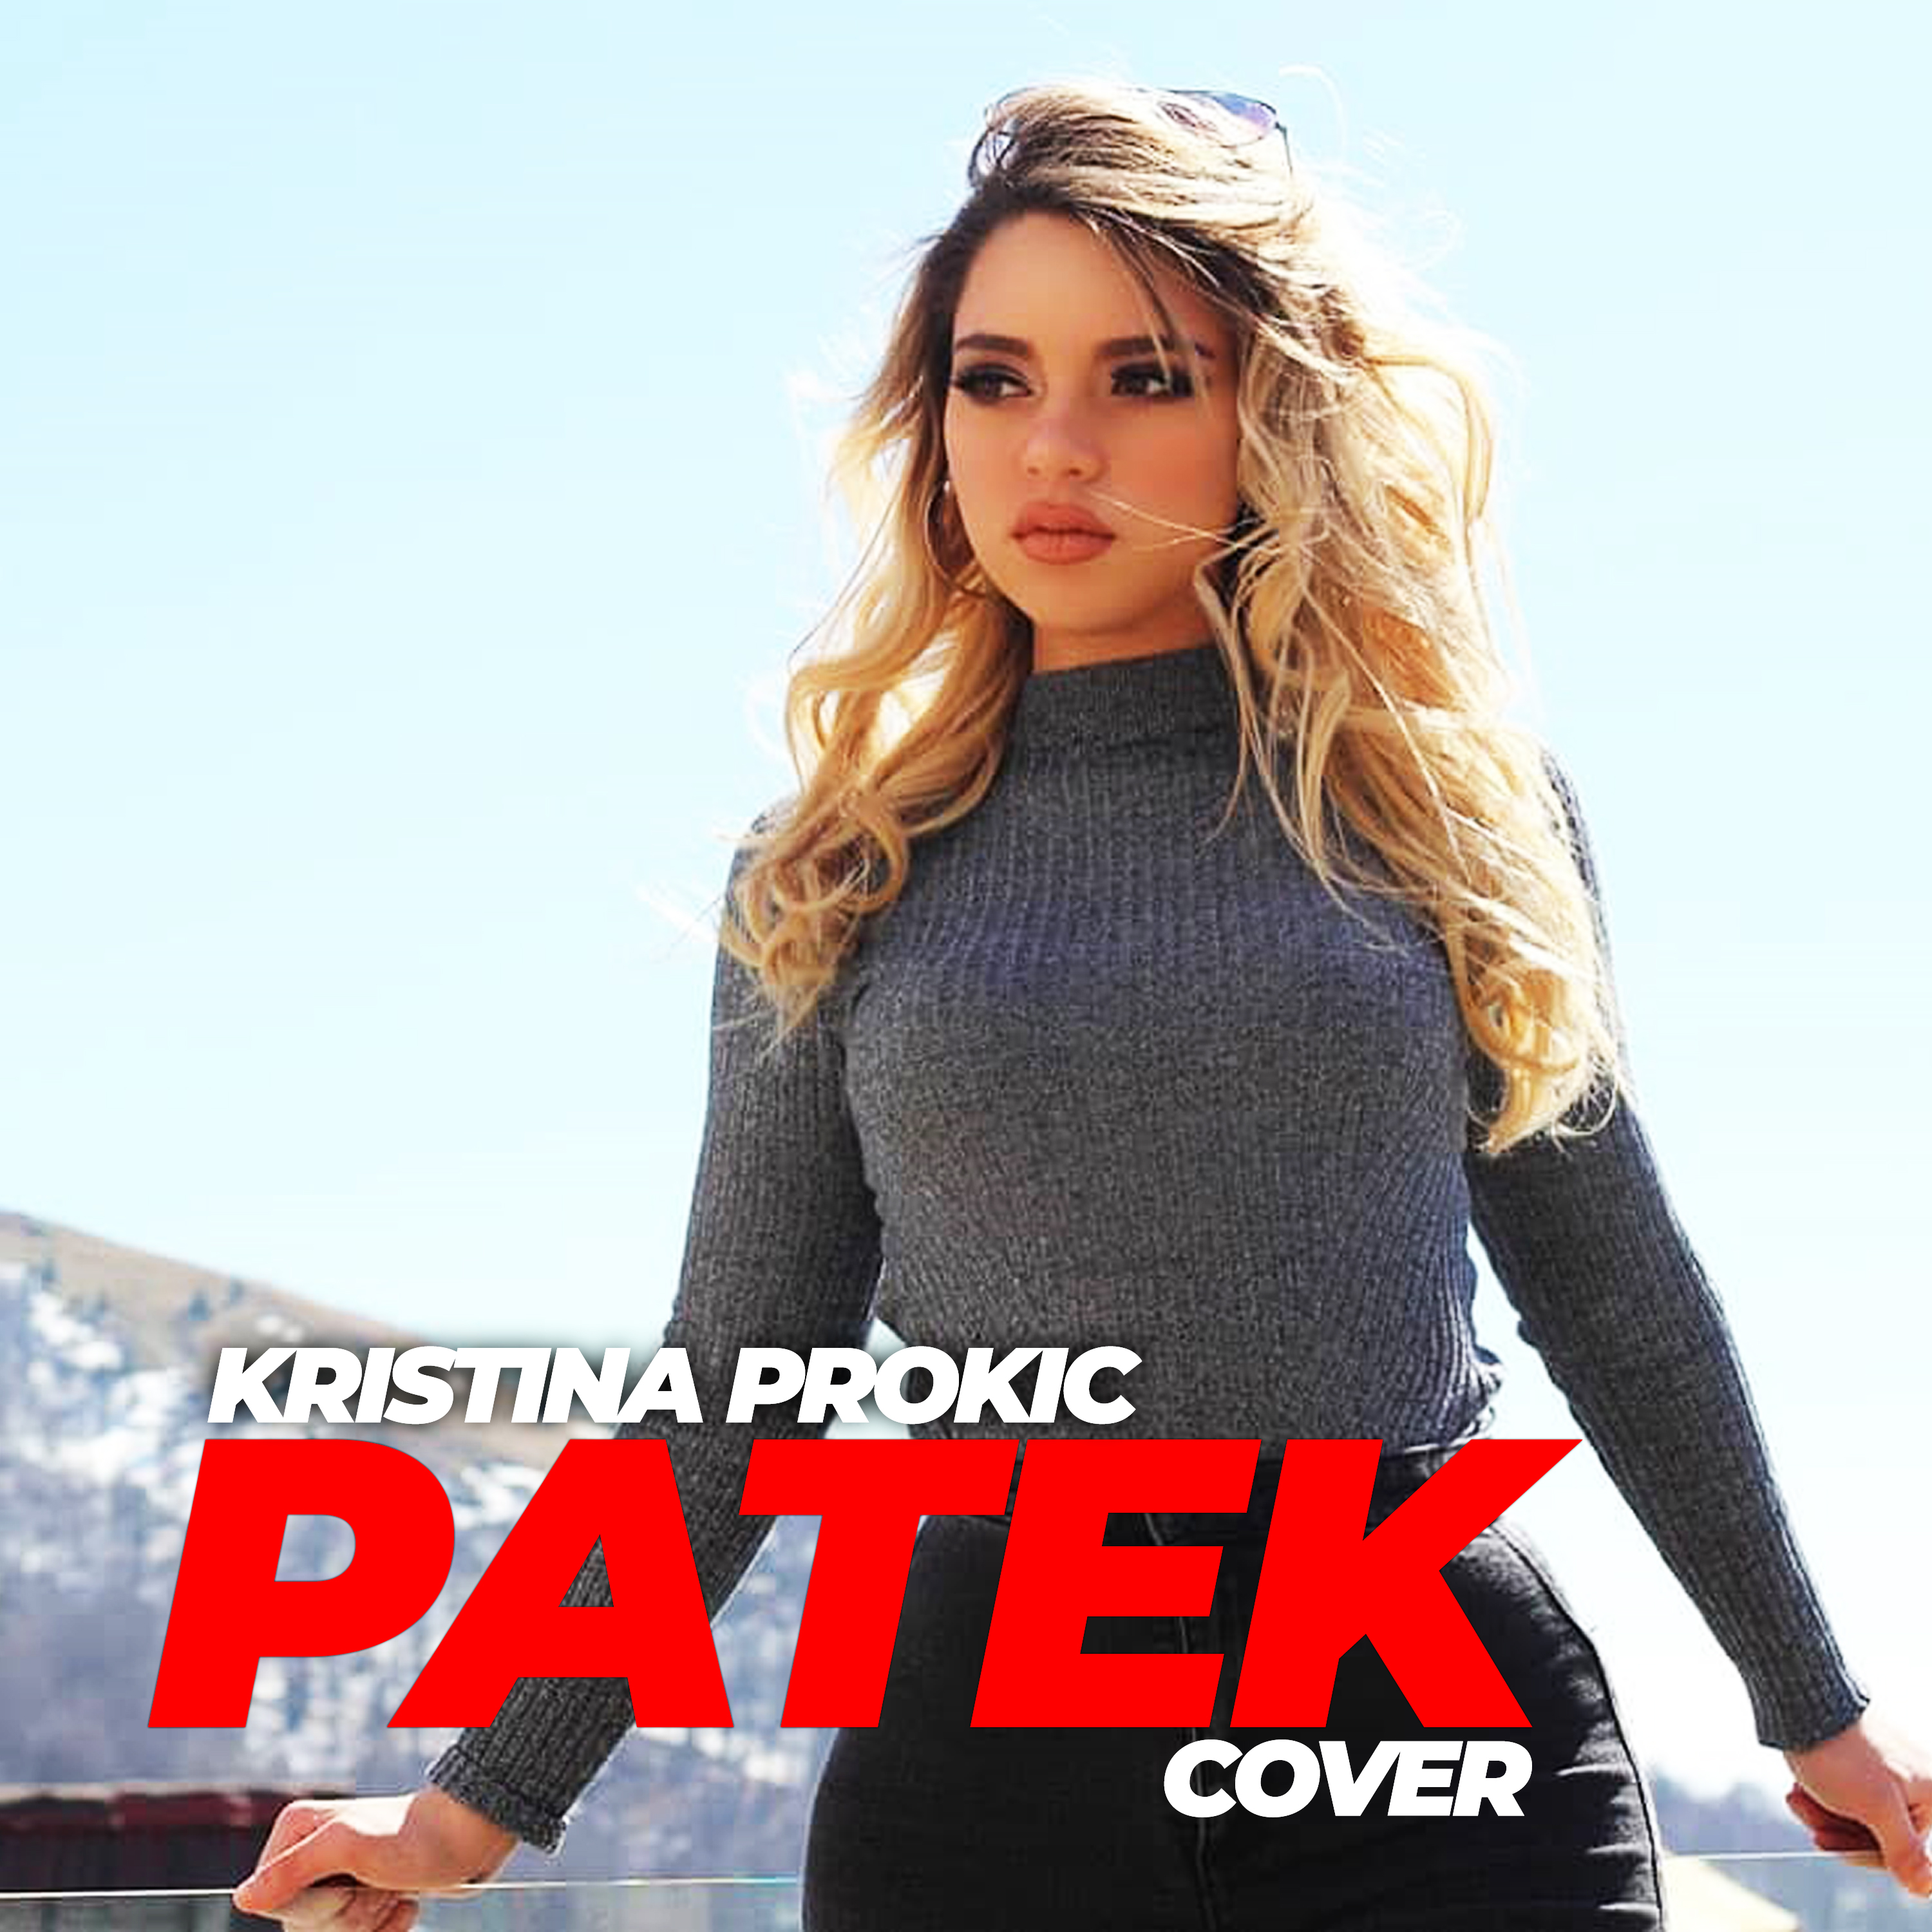 Kristina Prokic - Patek (Cover) - Listen on Spotify, Deezer, YouTube, Google Play Music and Buy on Amazon, iTunes Google Play | EMDC Network